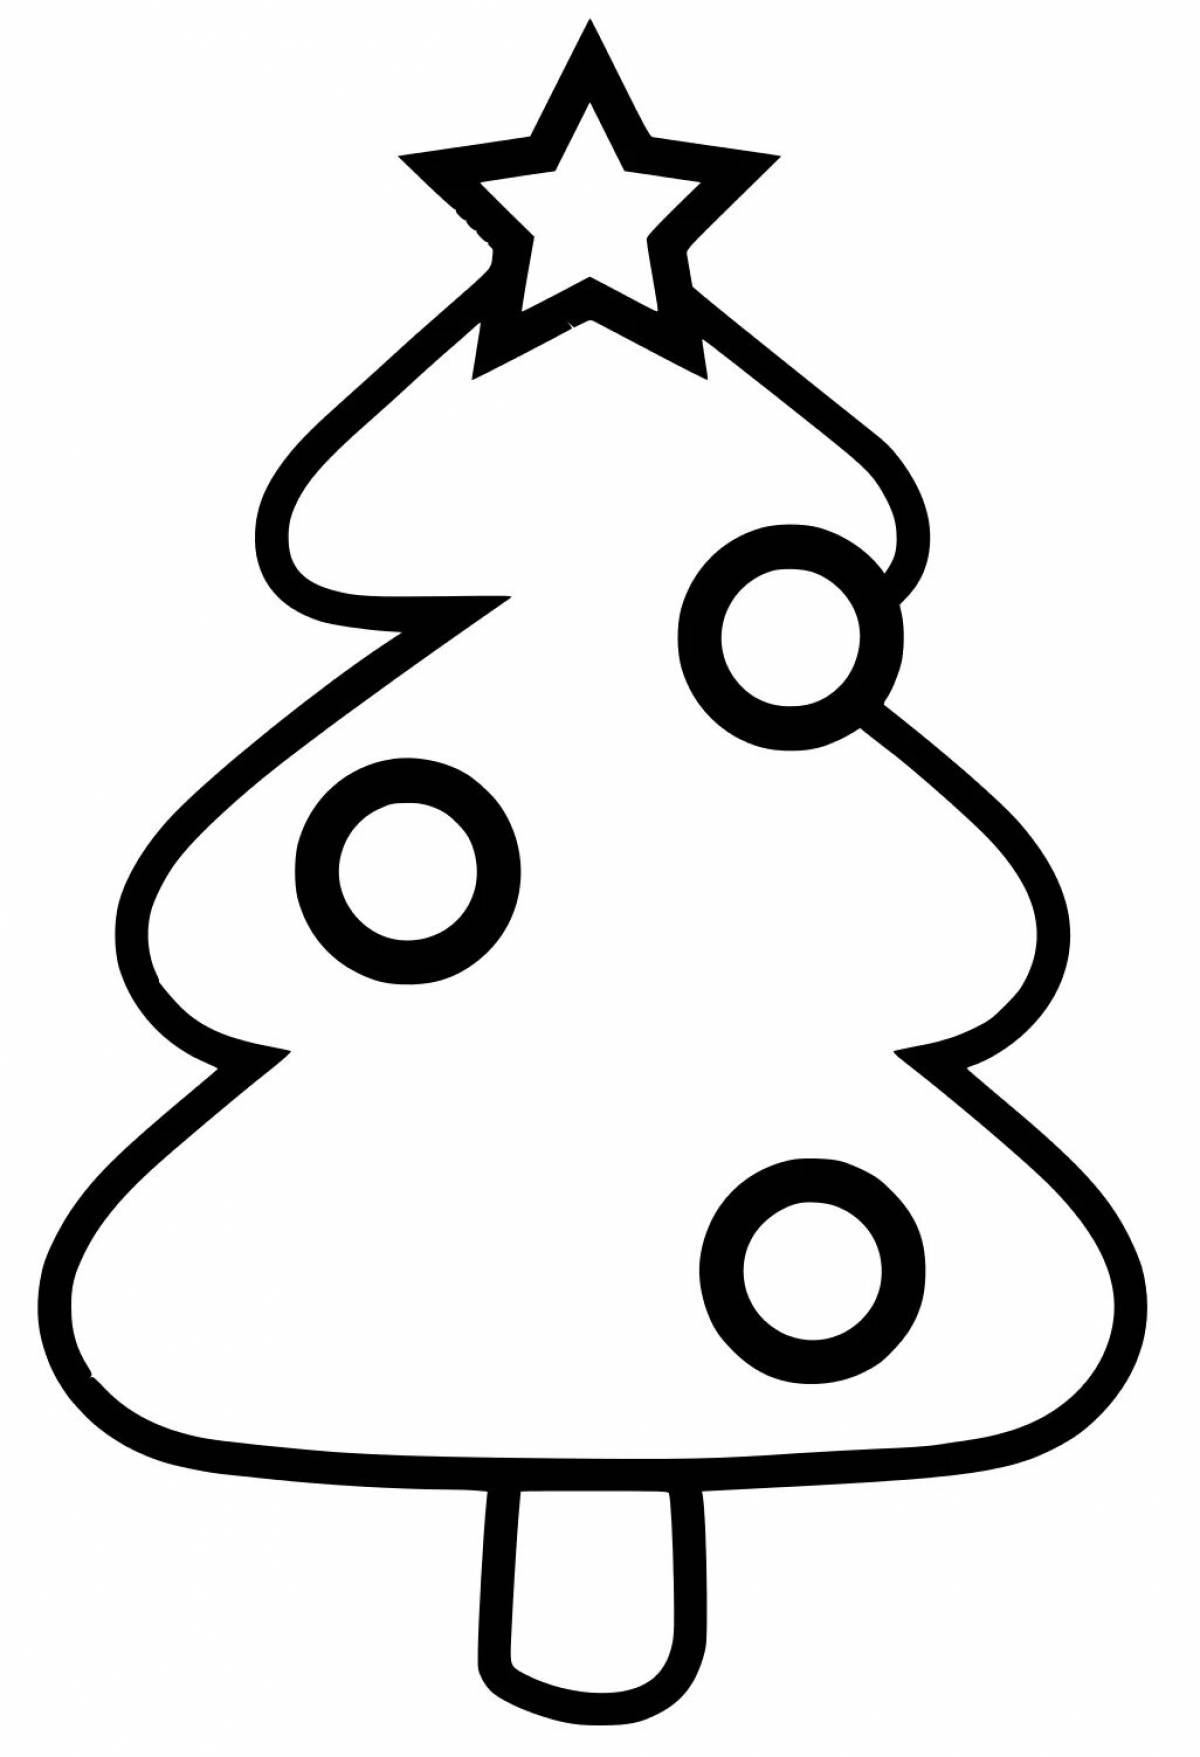 Christmas tree with balls for kids #6